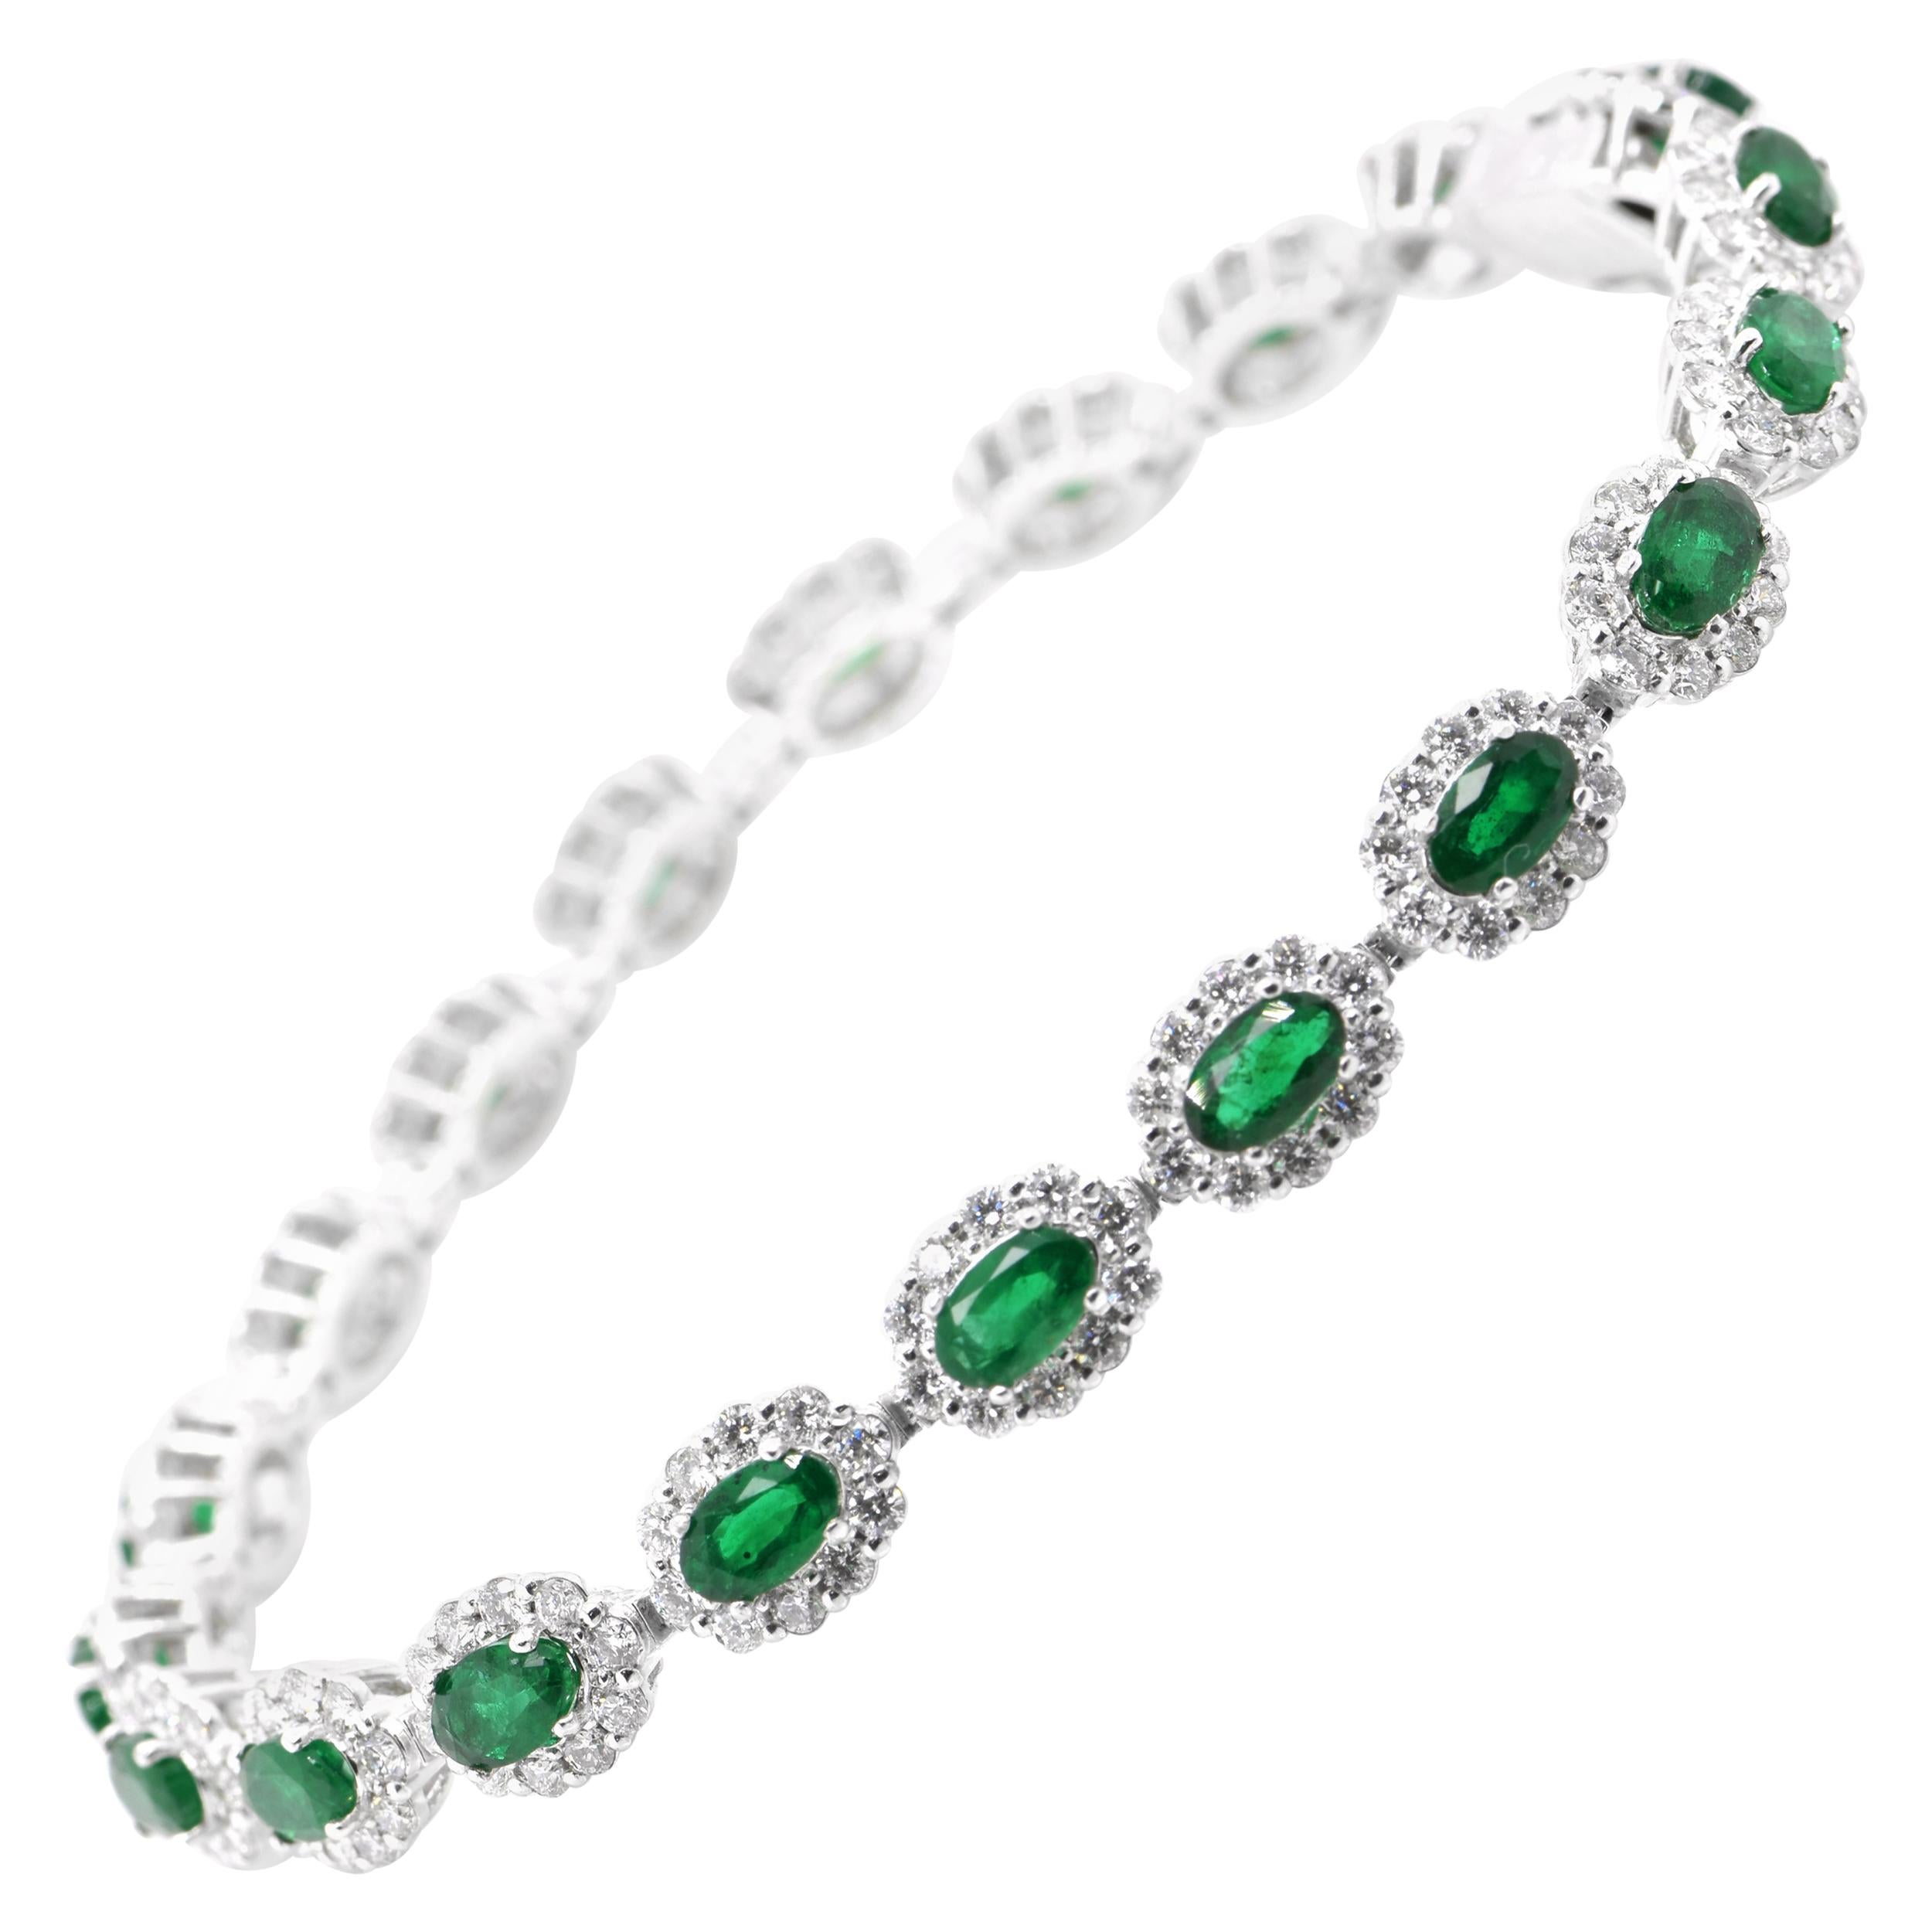 4.55 Carats, Natural Emeralds and Diamond Tennis Bracelet Set in Platinum